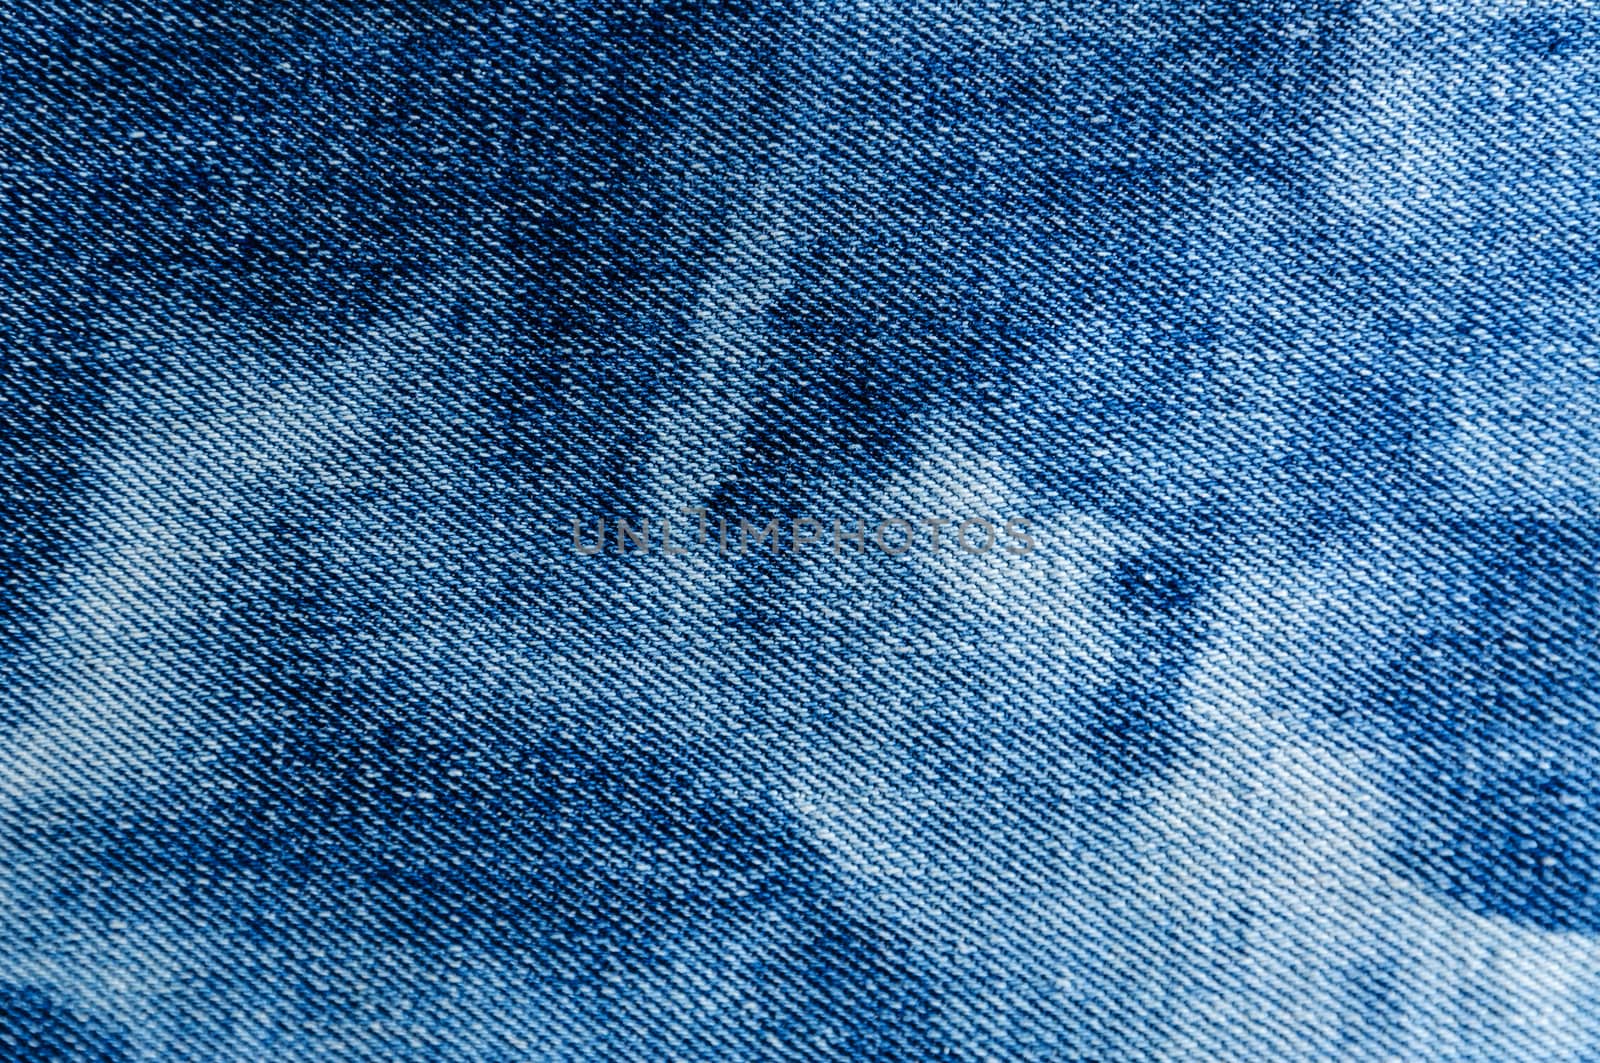 Blue denim jeans texture, background 